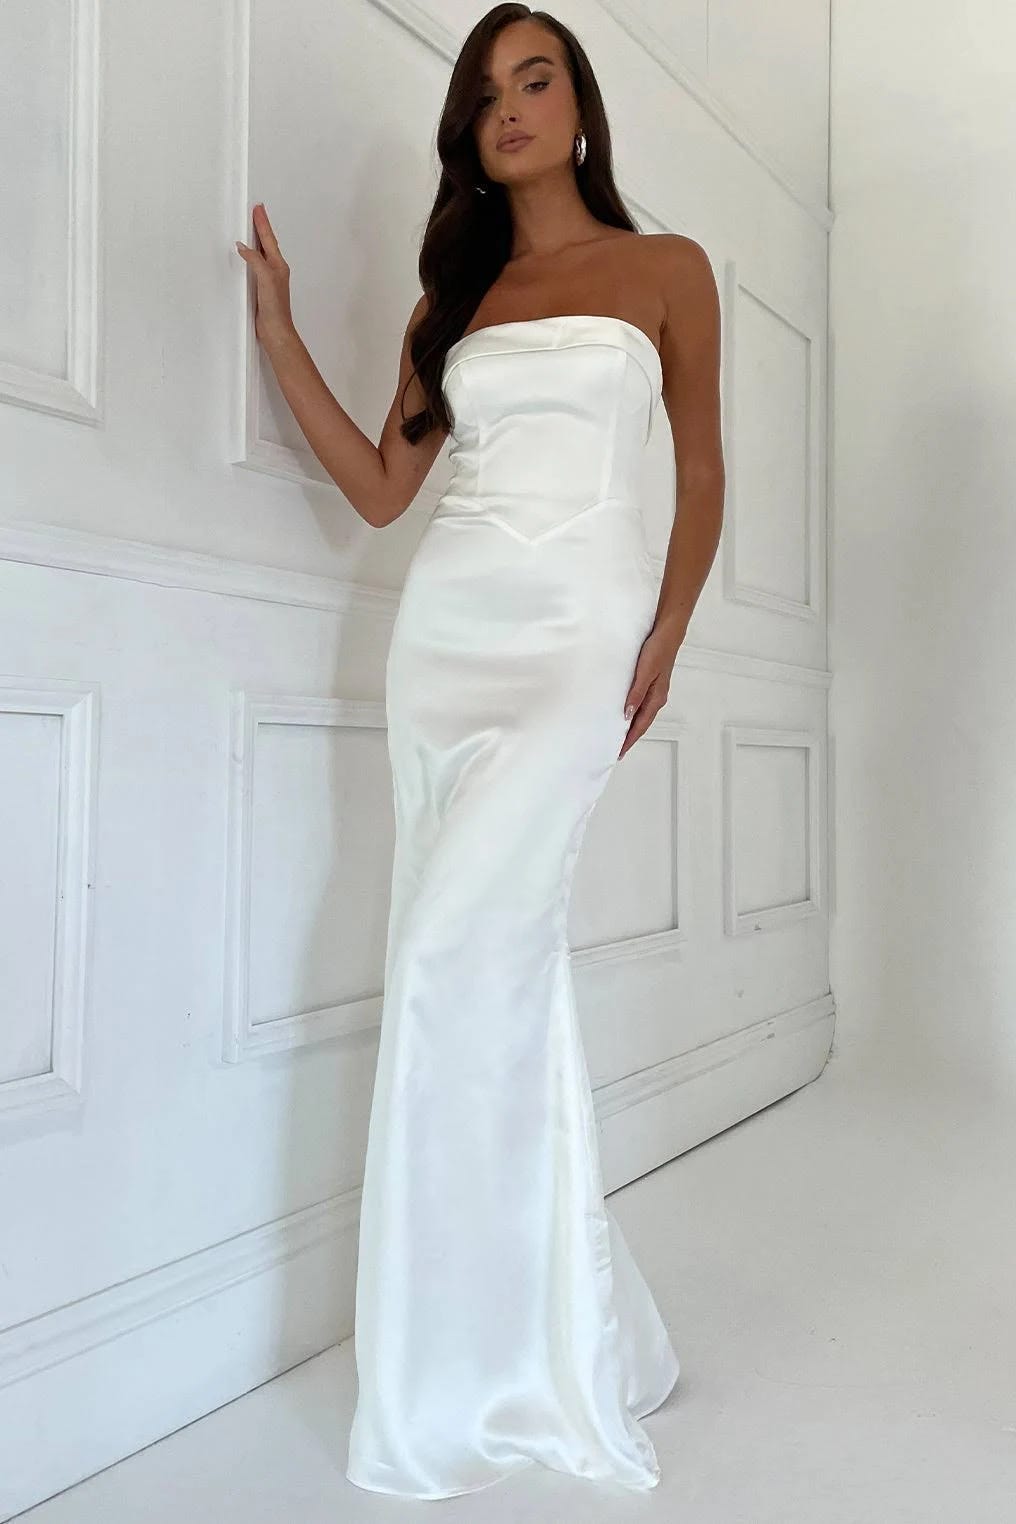 Strapless White Maxi Dress for Brides | Image